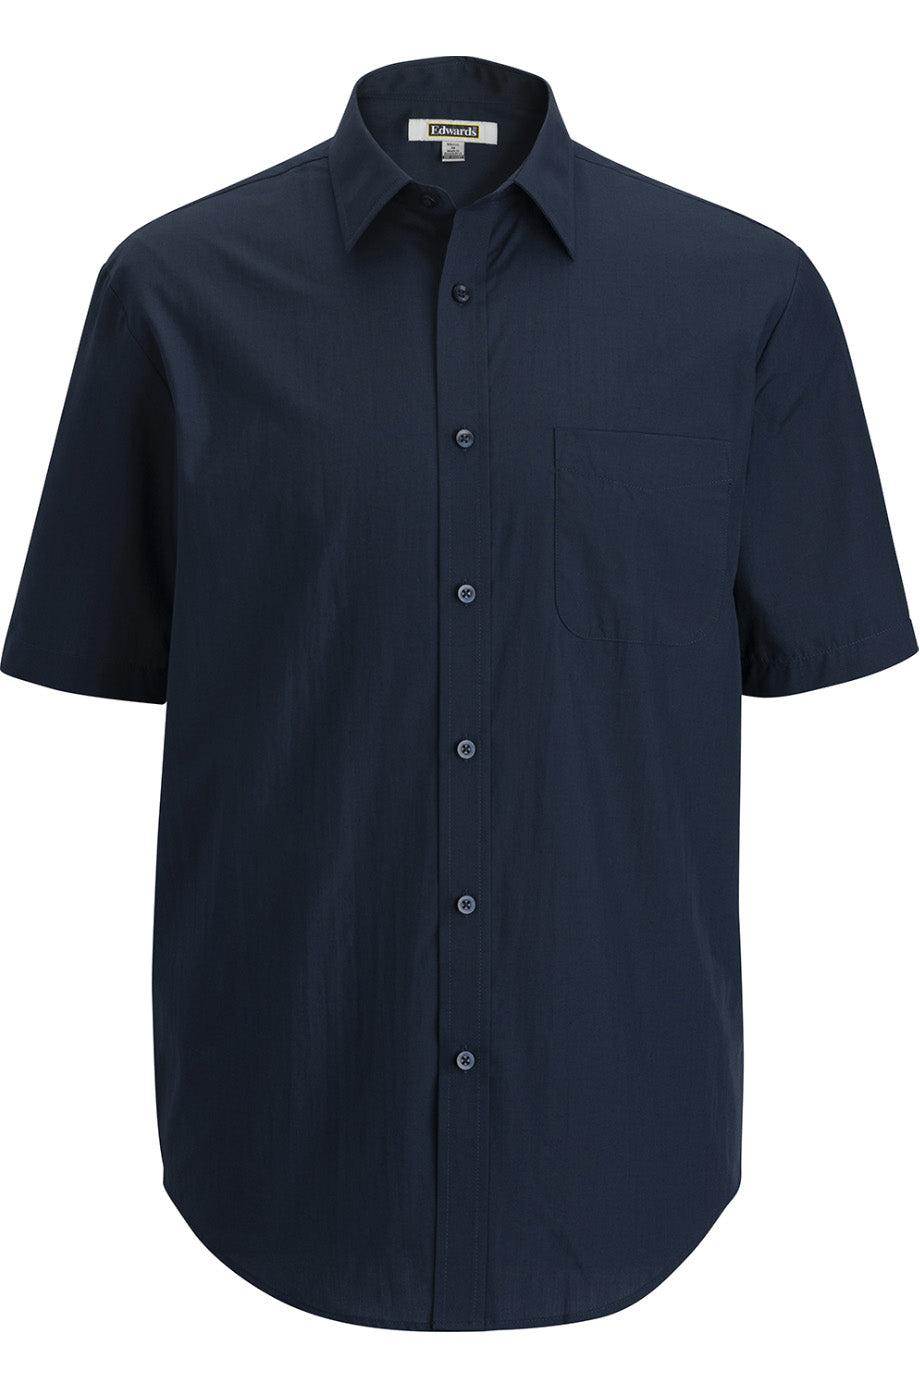 Men's Navy Essential Broadcloth Shirt